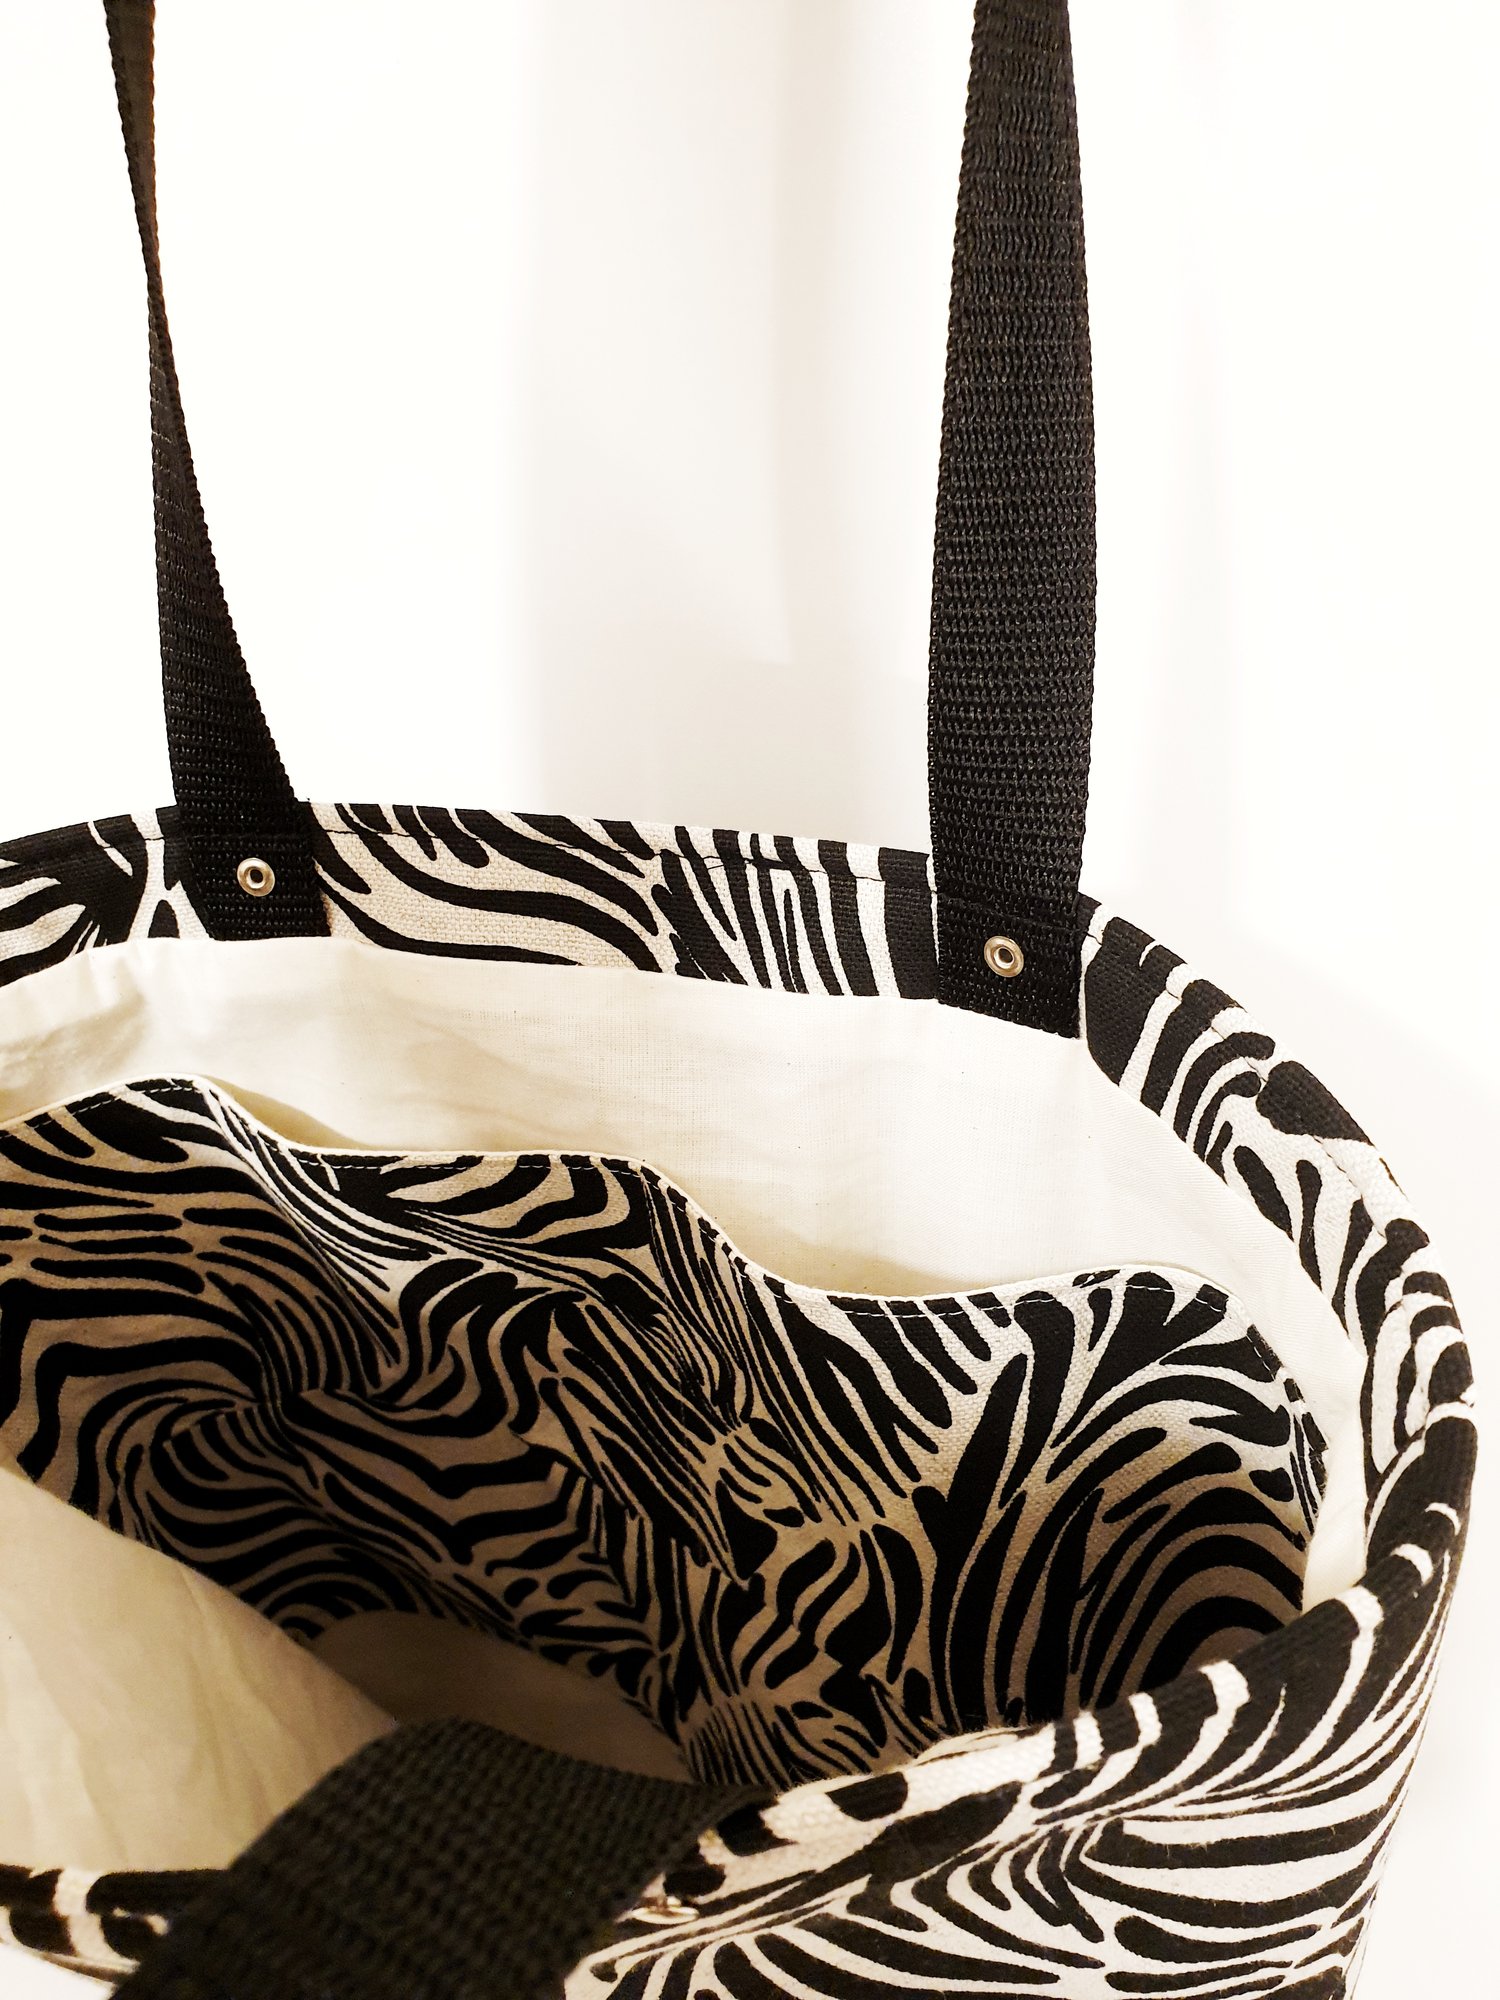 Image of Torba Zebra / Shoulder bag Zebra